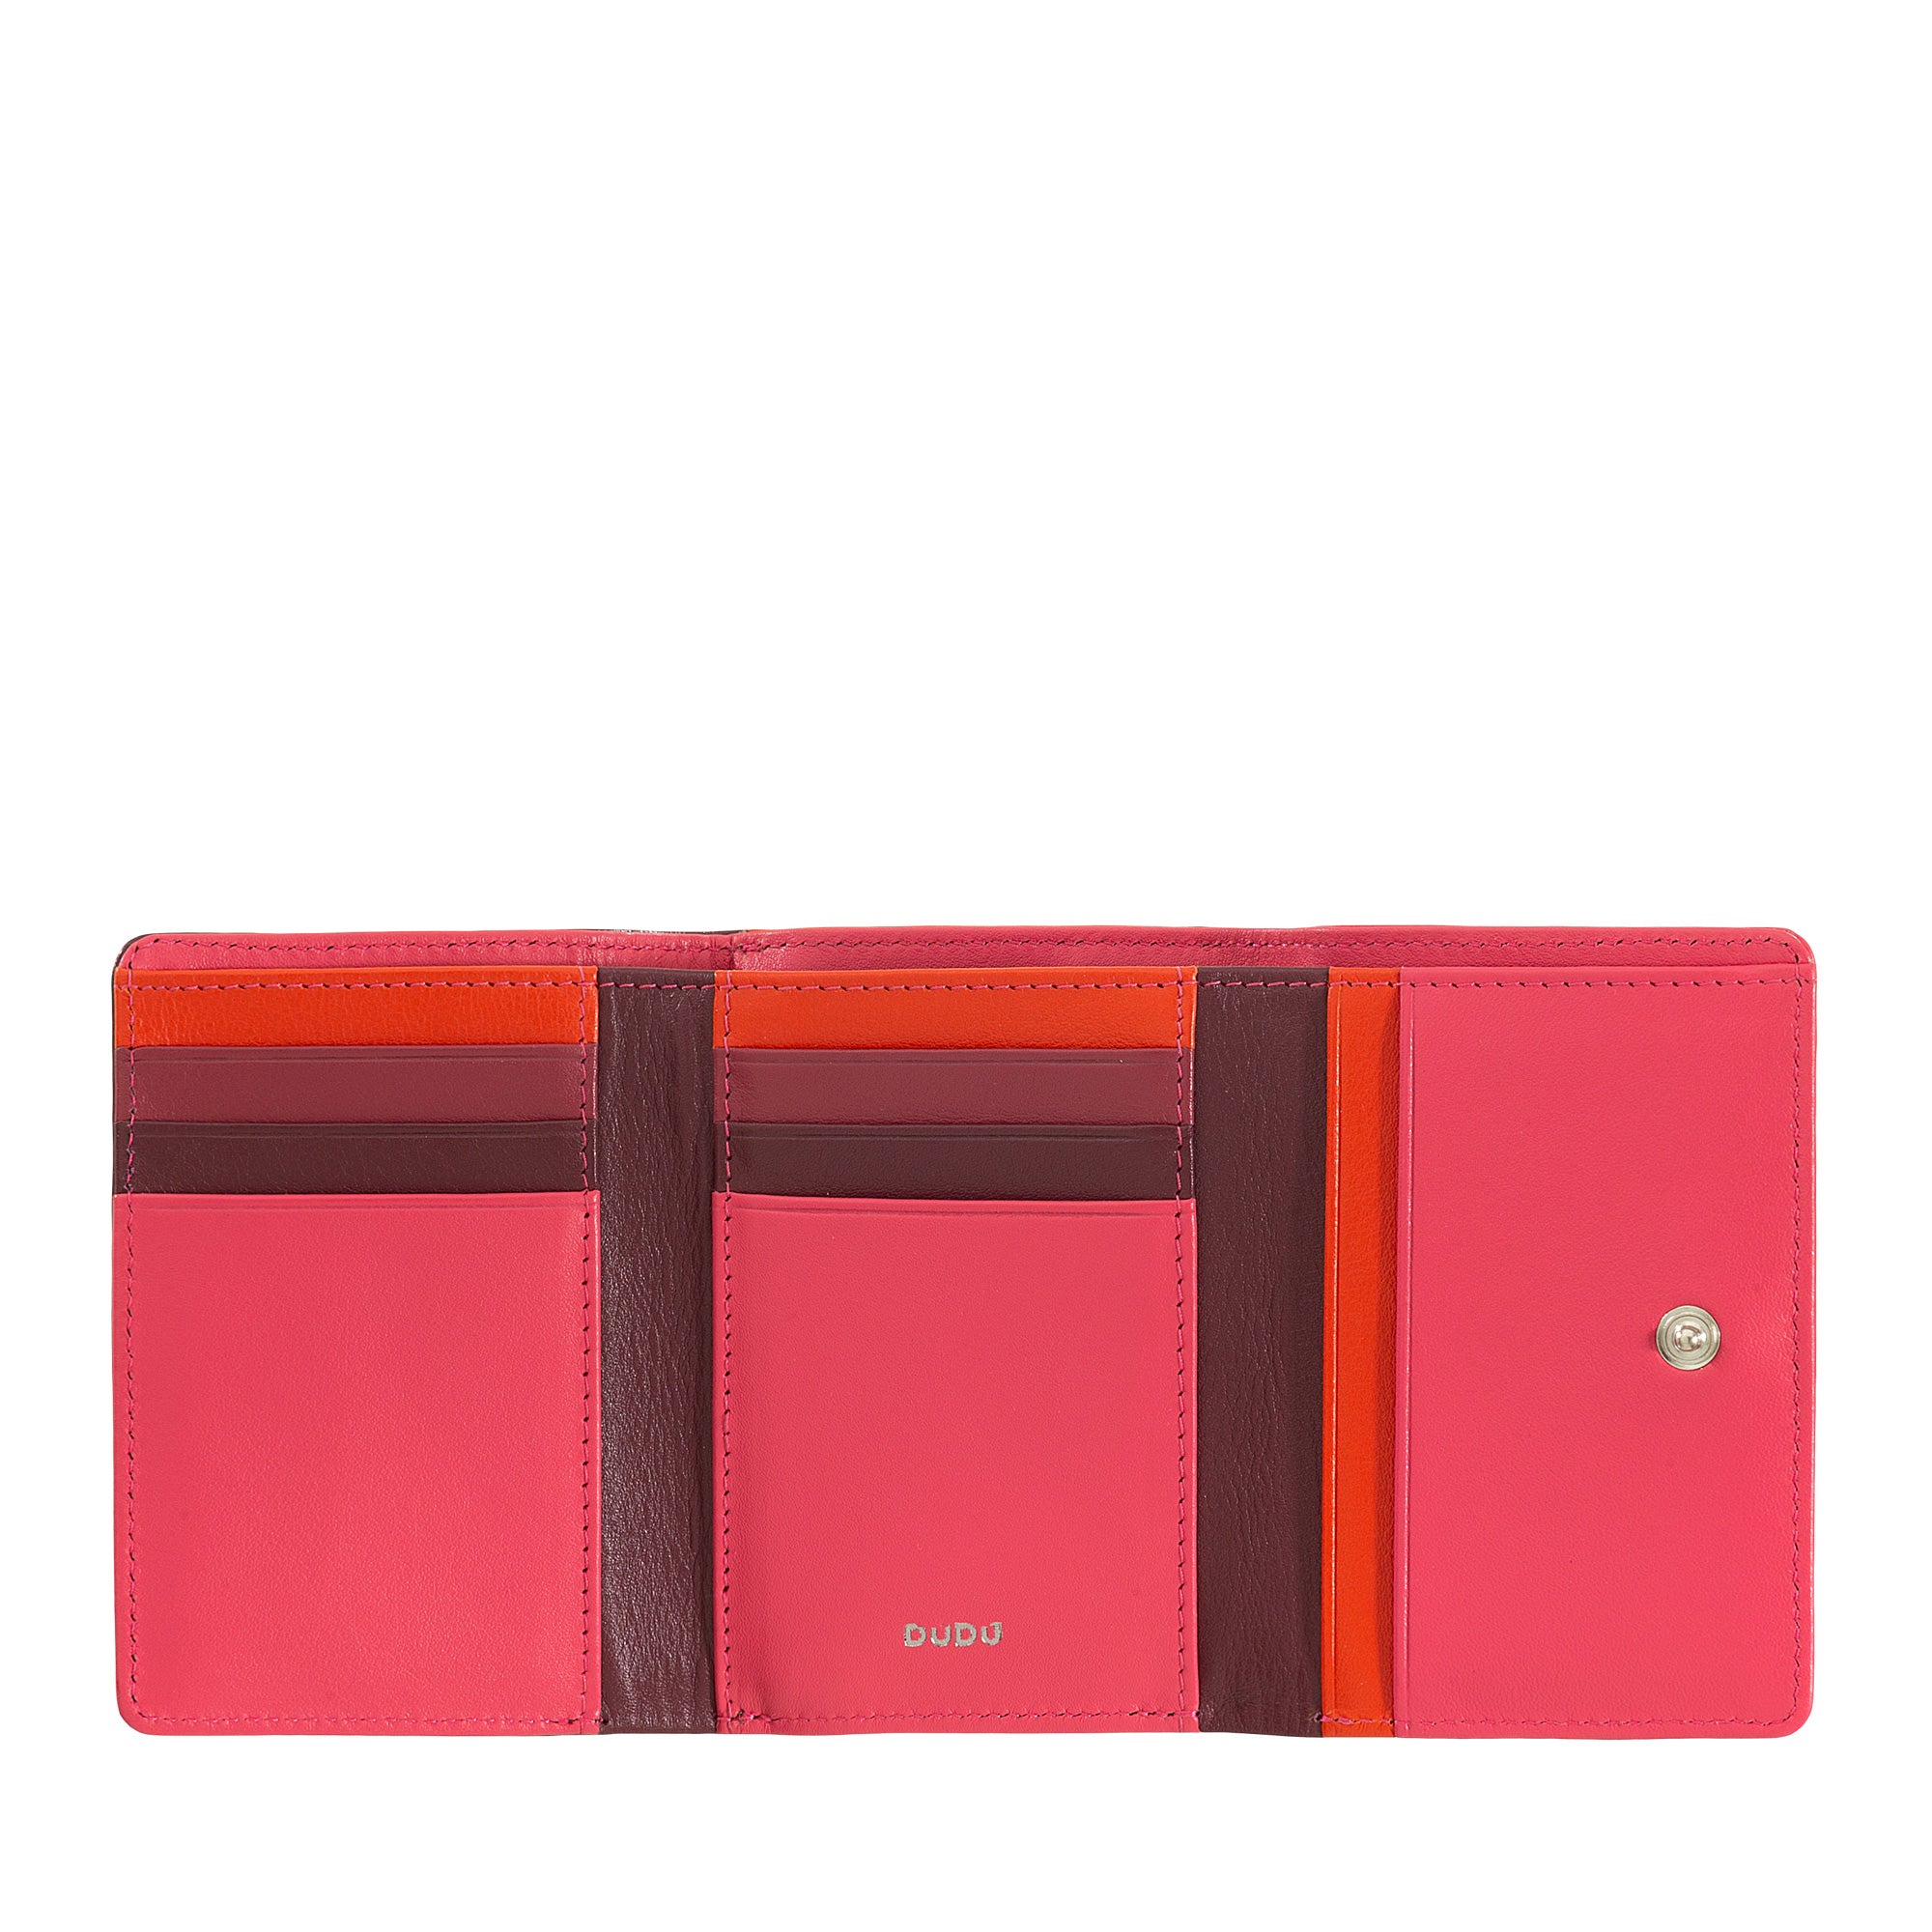 Colorful Wallet Corsica Raspberry Dudubags su Artisia Store